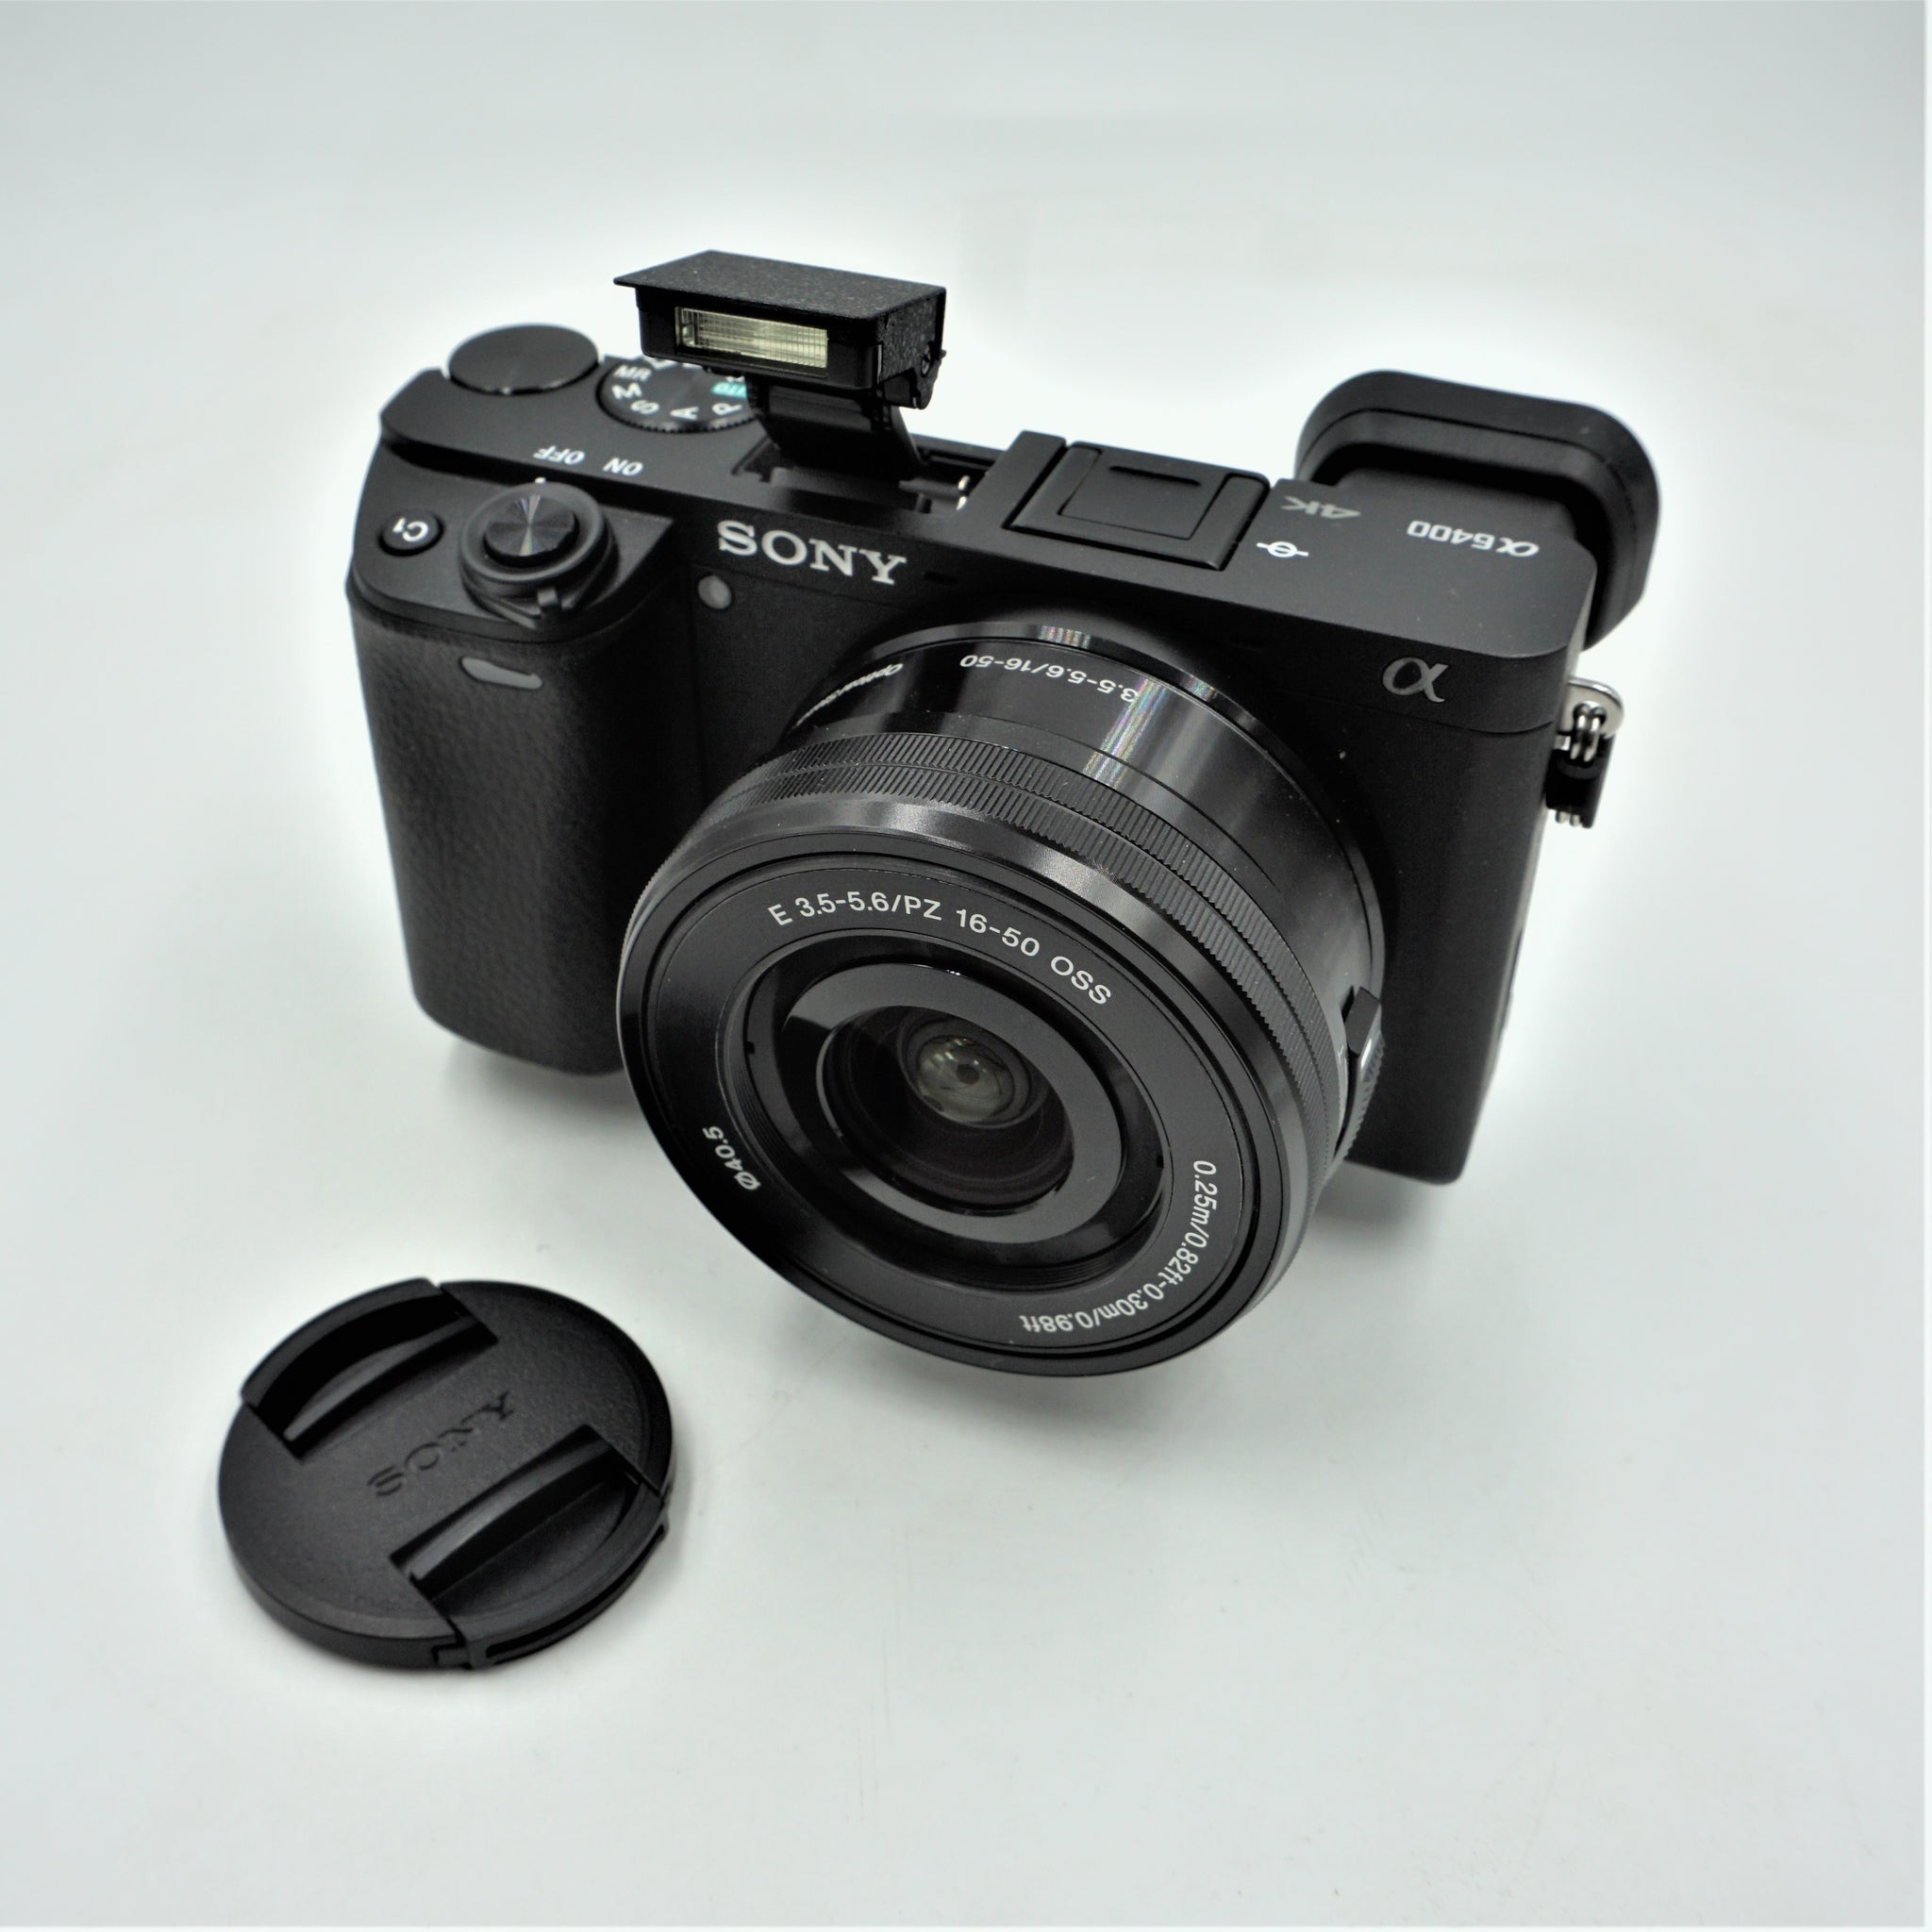 Sony Alpha a6400 Mirrorless Digital Camera with 16-50mm Lens - DigiCam